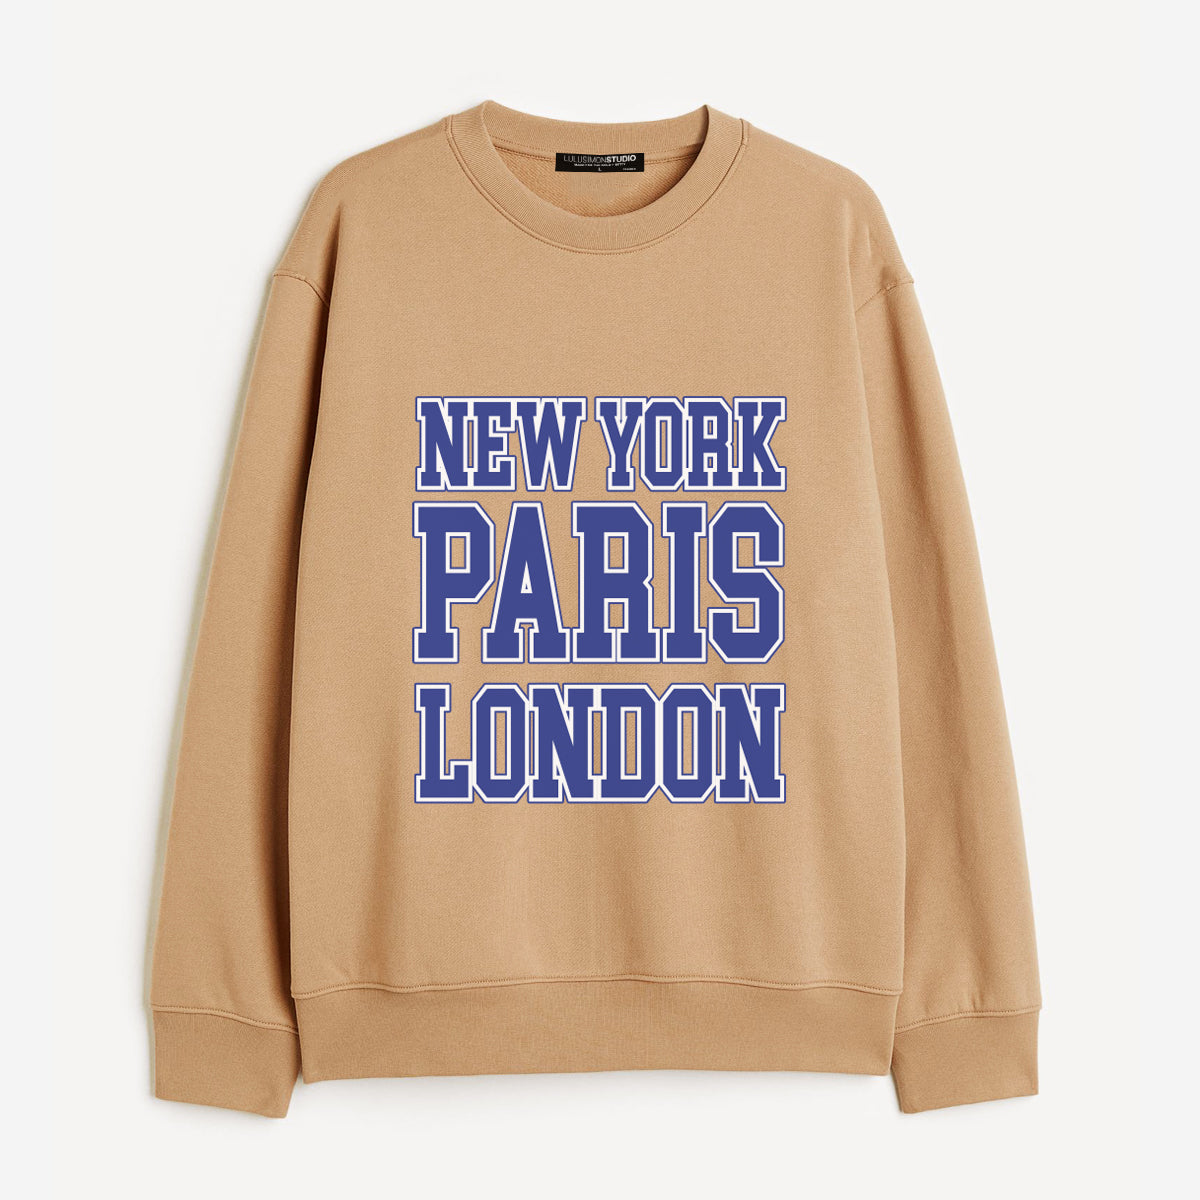 New York Paris London Sweatshirt